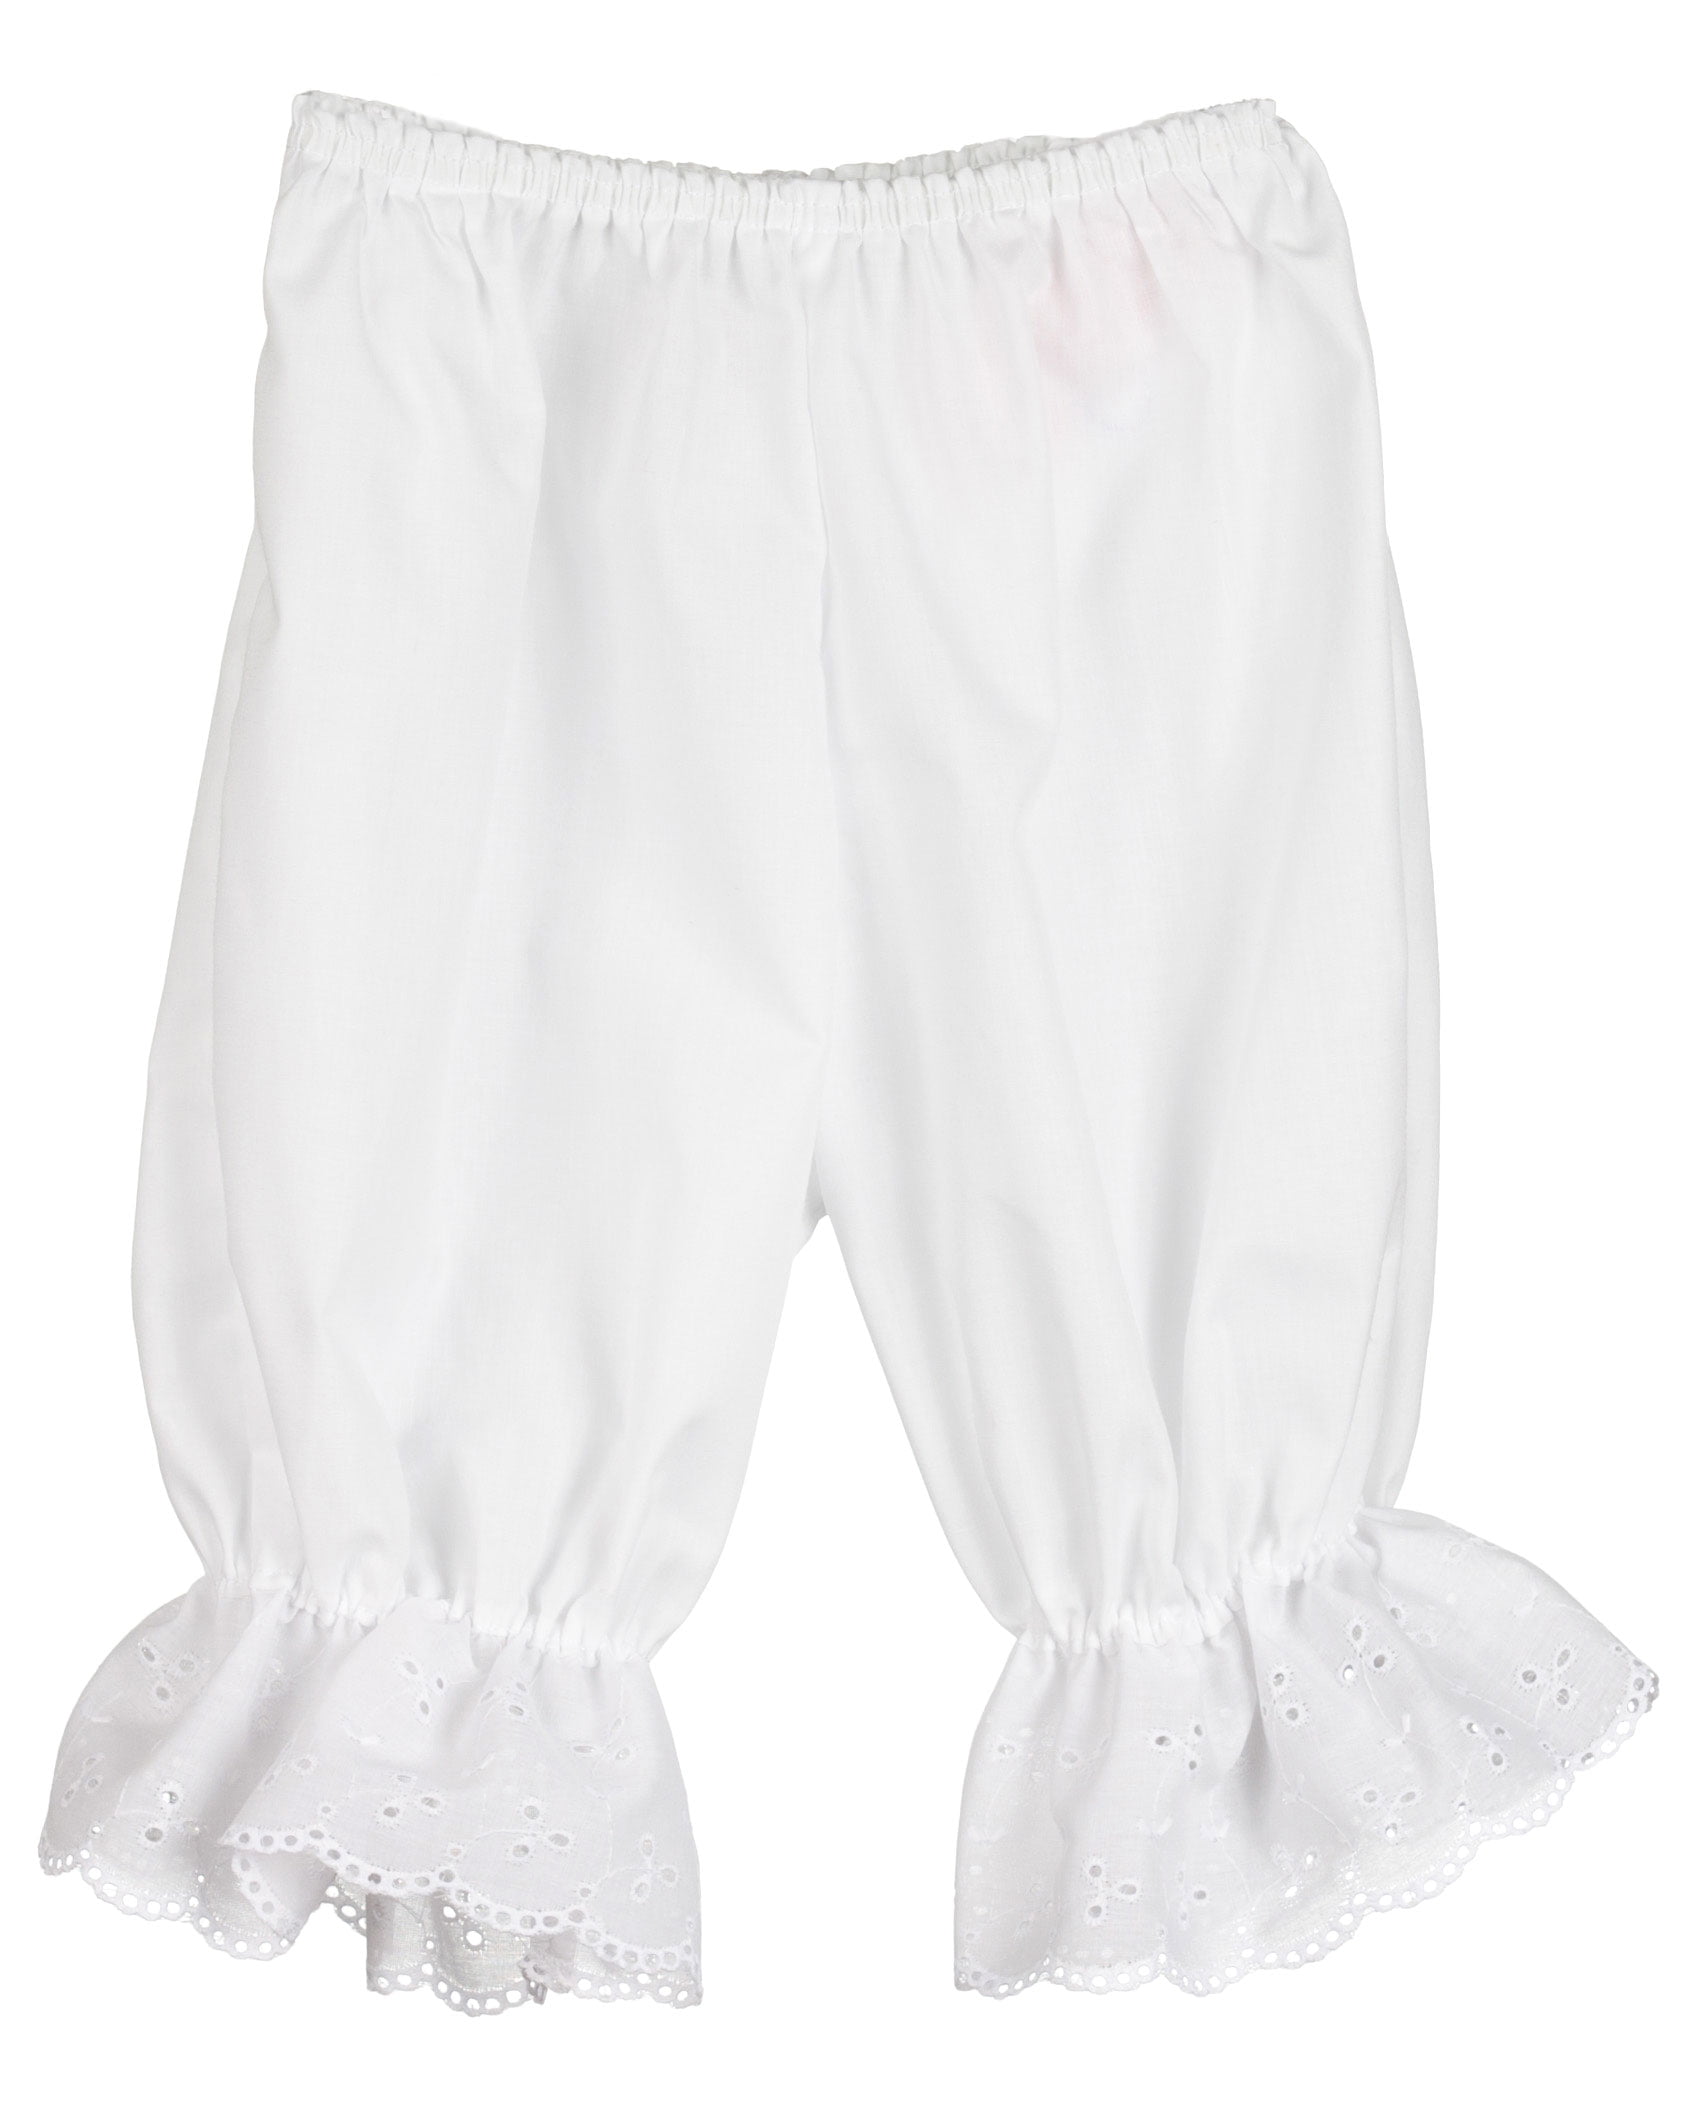 White Pantaloon Pettipants Bloomer Under-pants, 3m - 6x